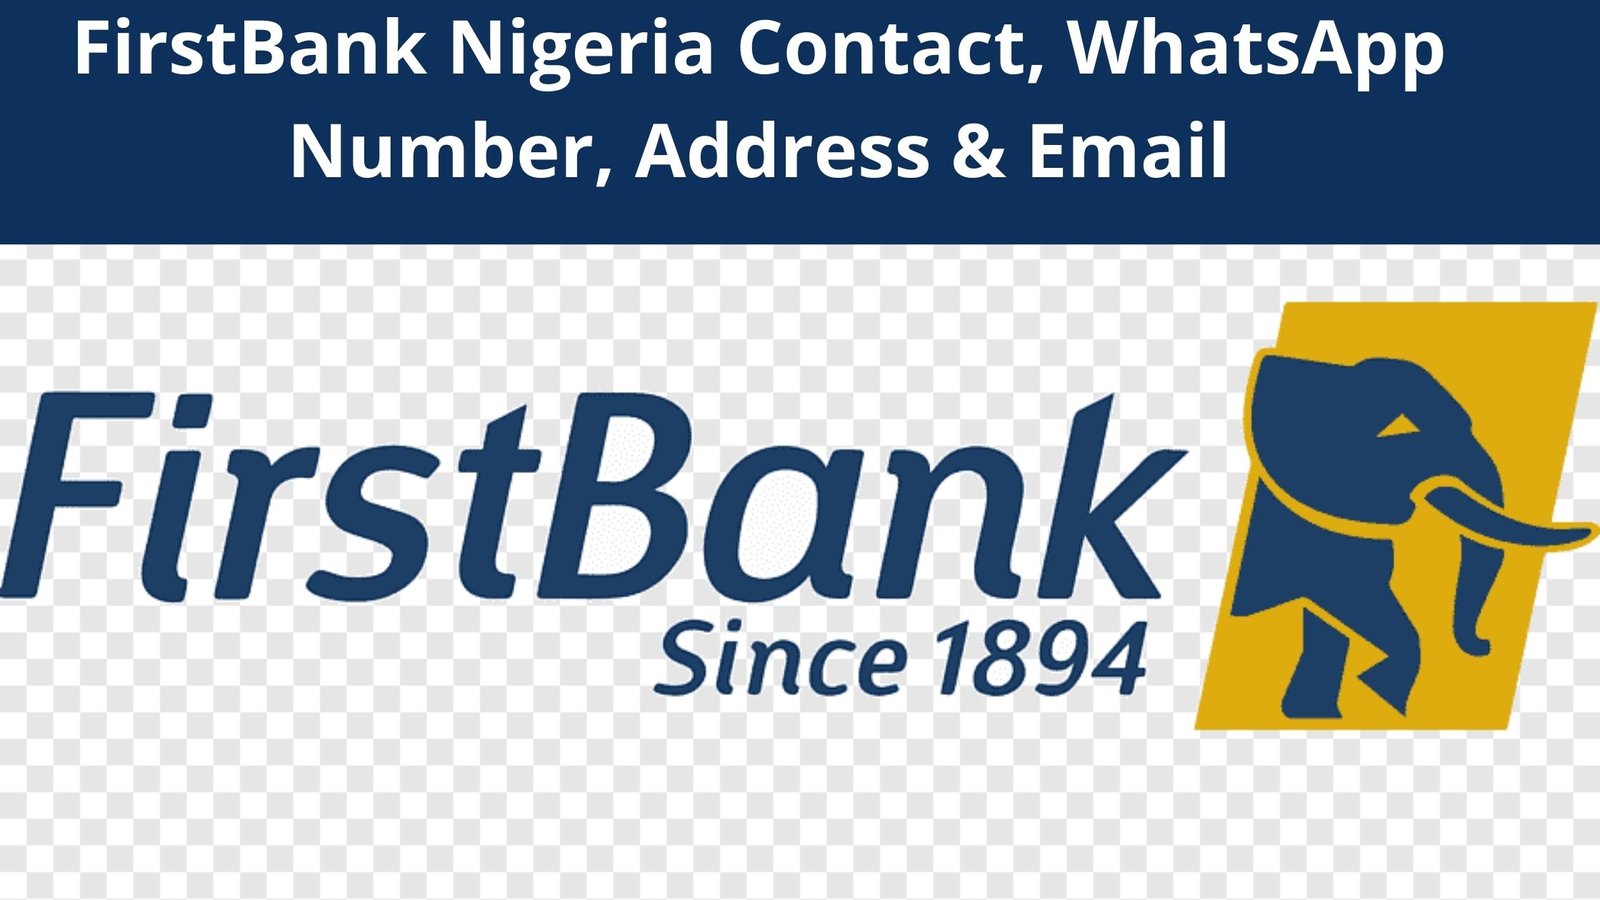 FirstBank Nigeria Contact